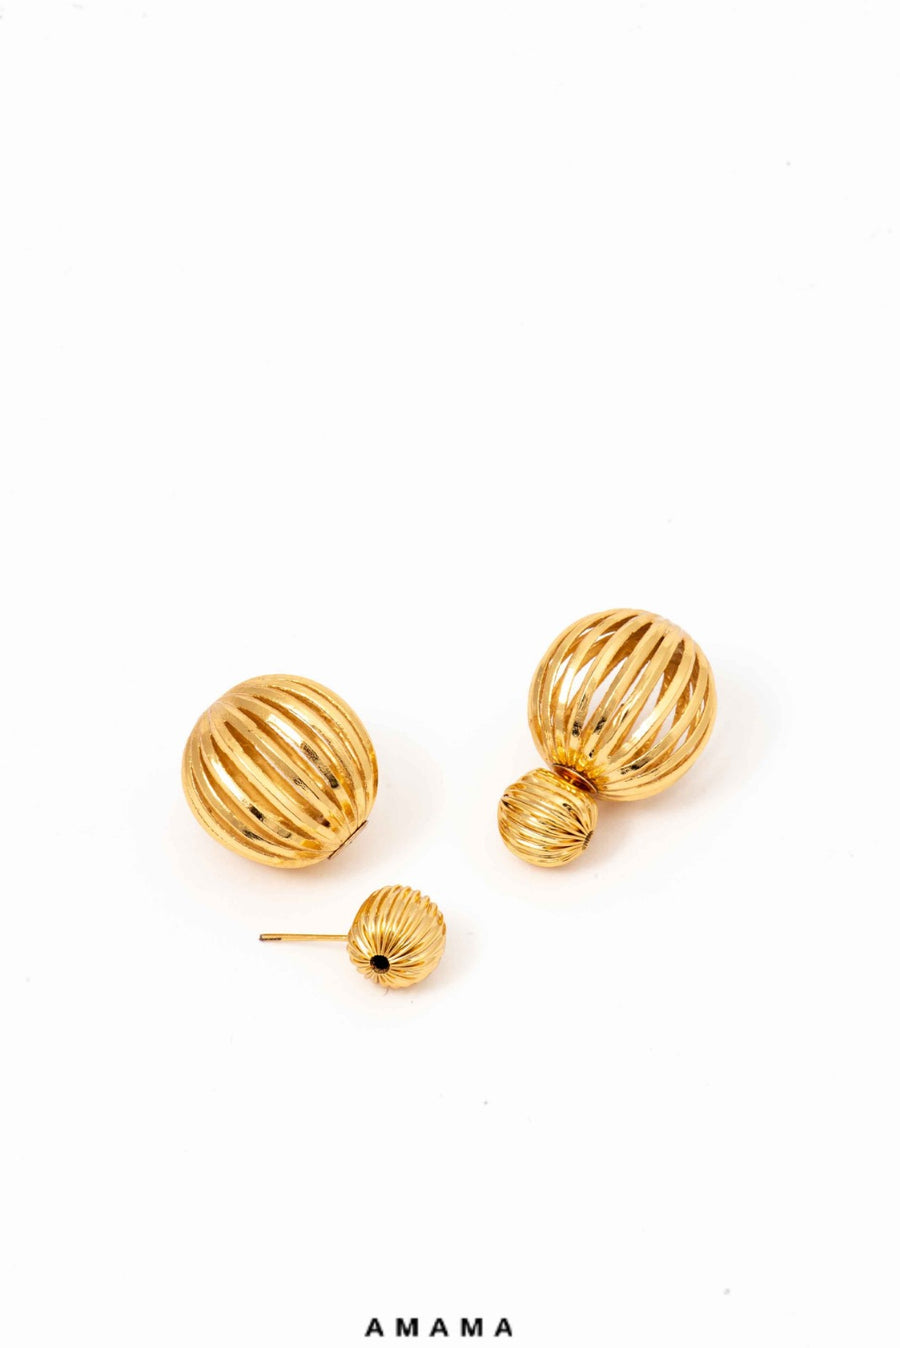 amama gold earrings